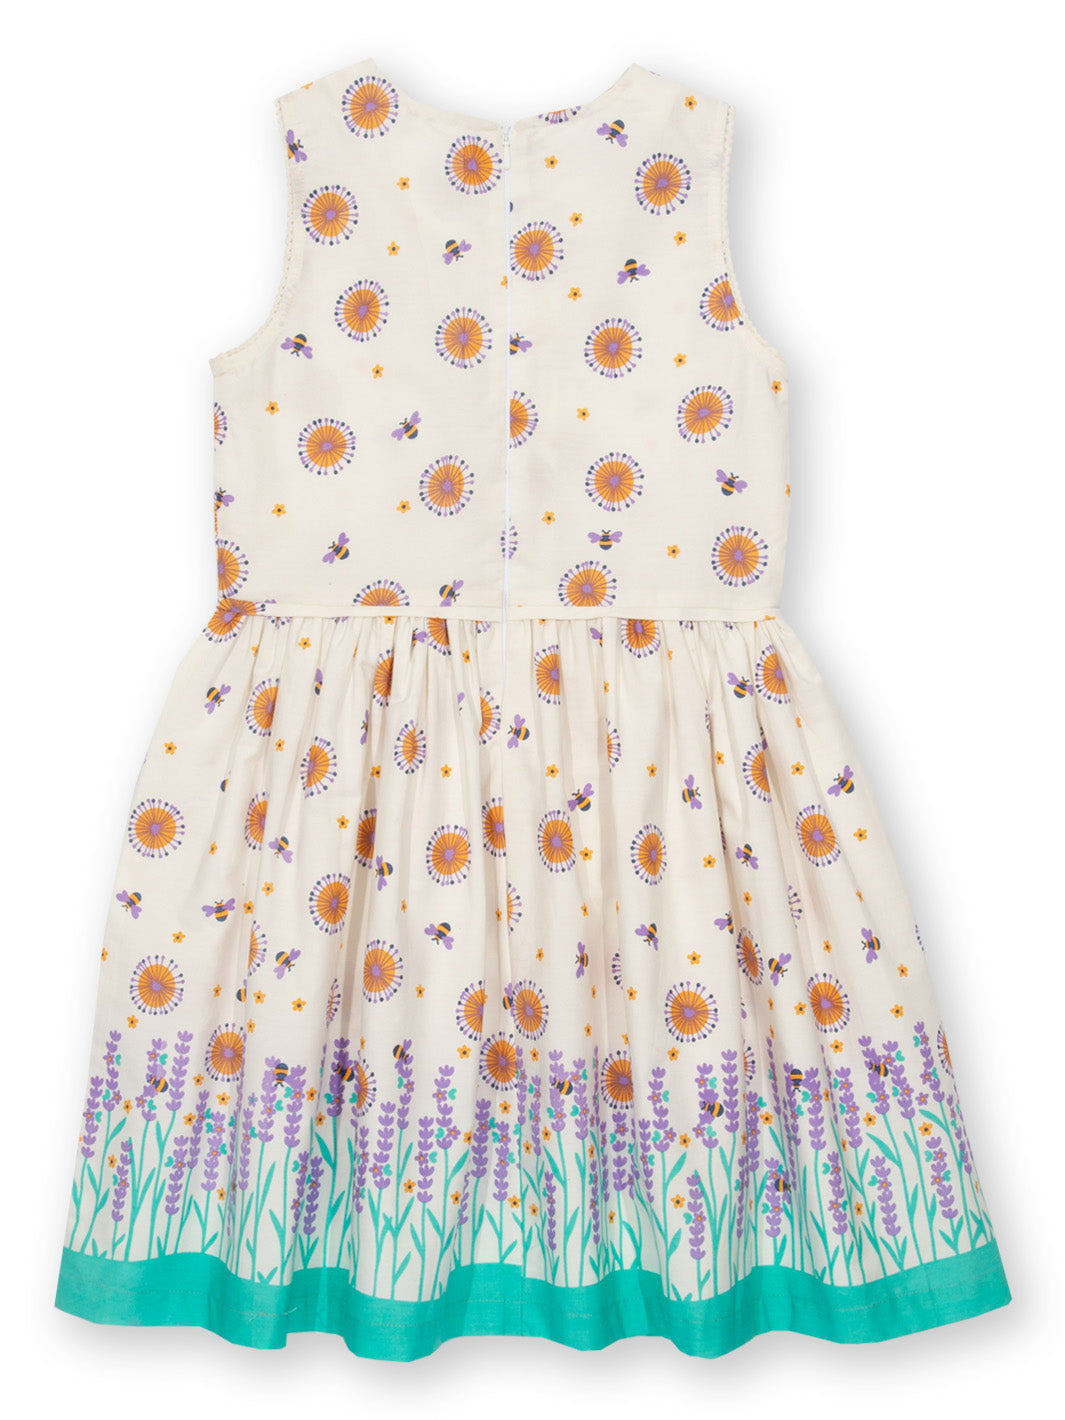 SALE Kite Lavender Love Dress SALE